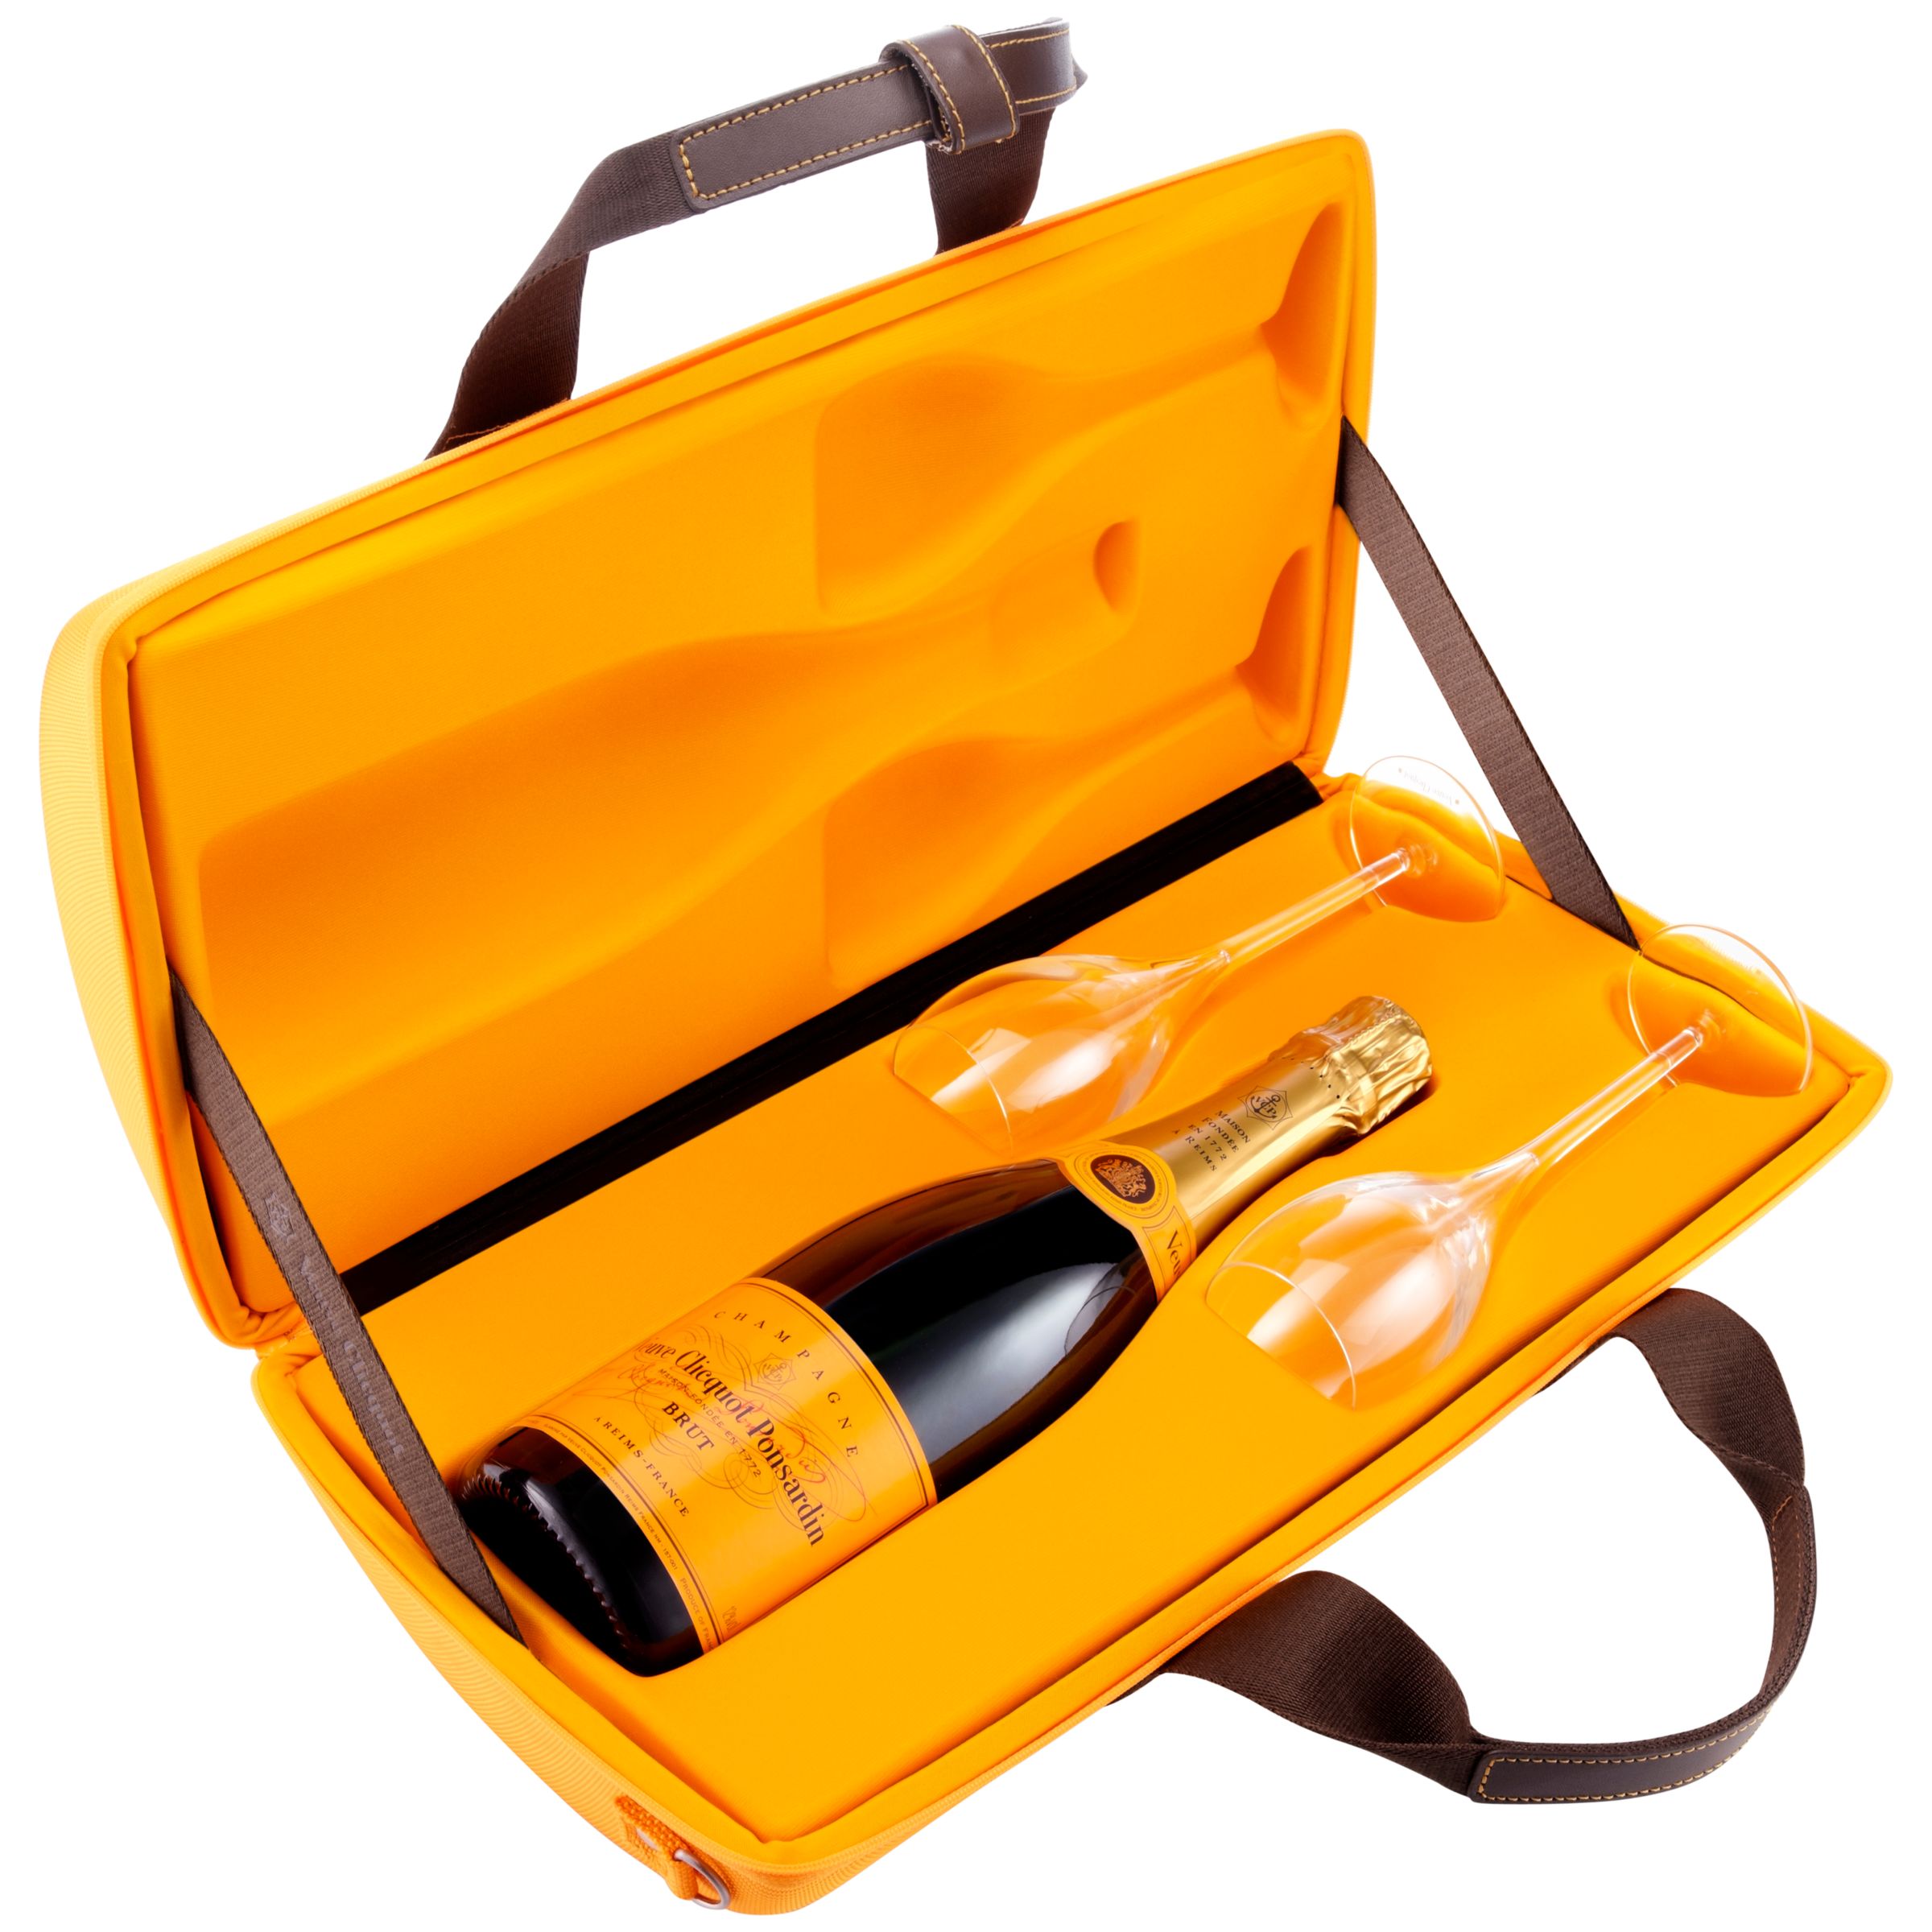 Veuve Clicquot Yellow Label Nv Champagne Traveller Gift Set 75cl Online At Johnlewis Com